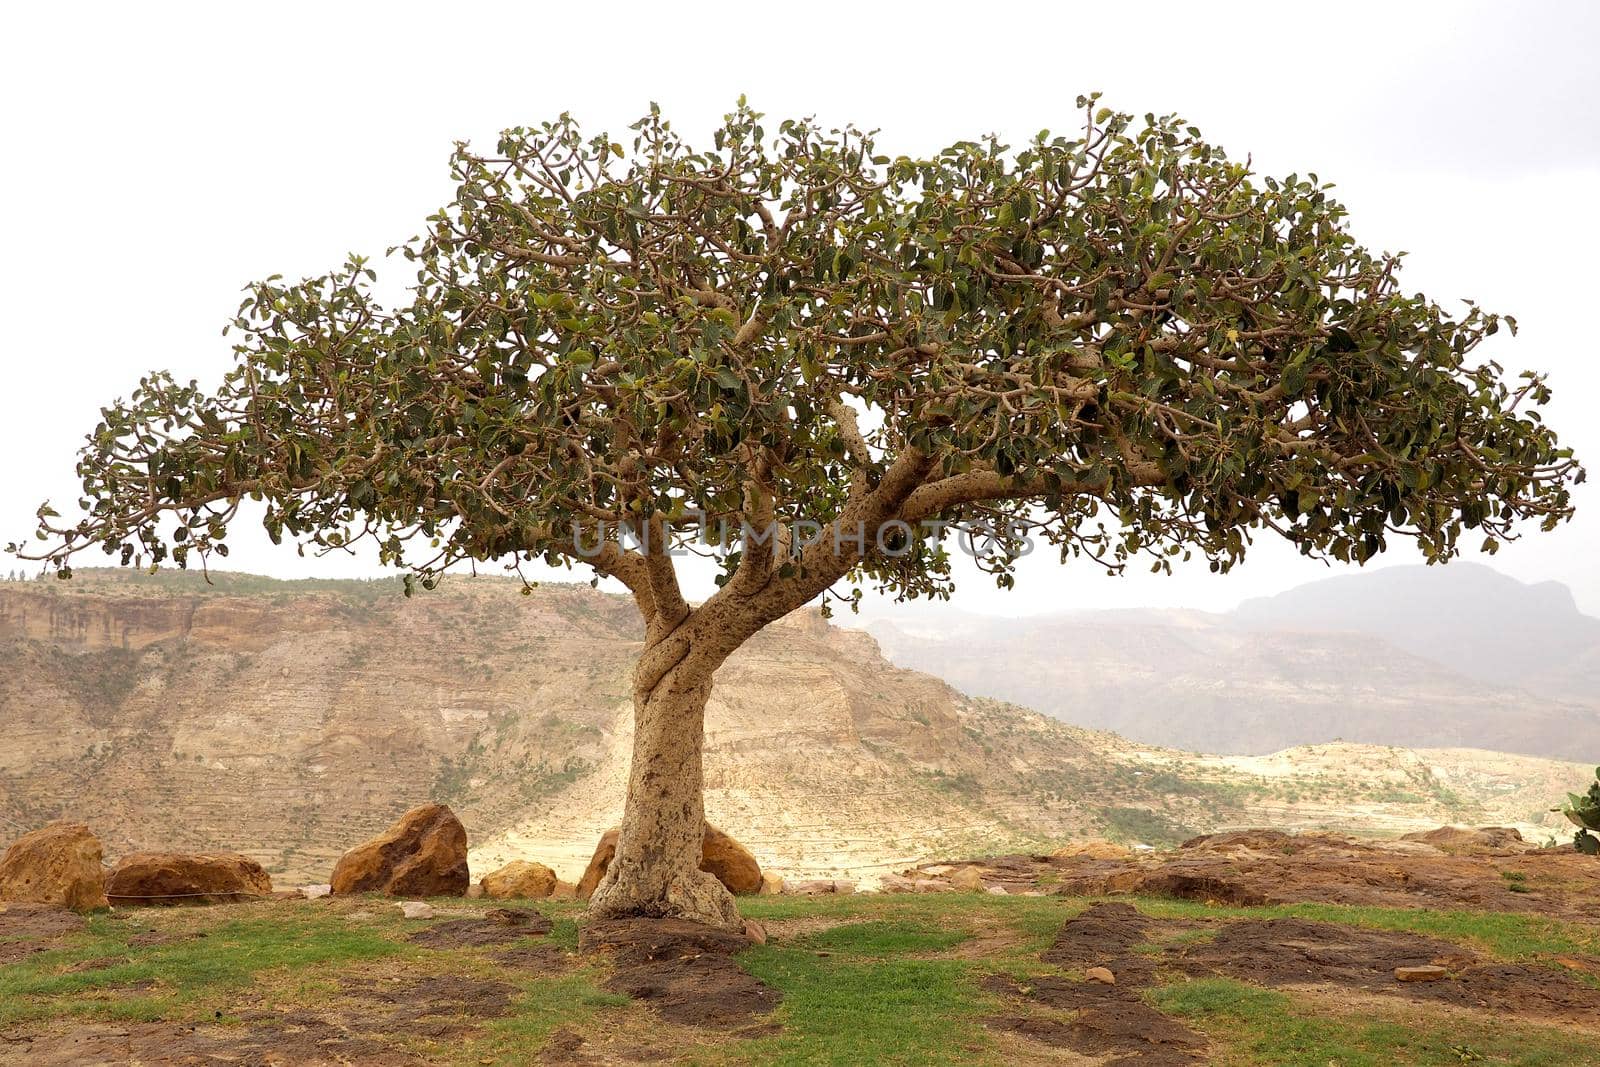 Lonely single tree on a rocky hilltop